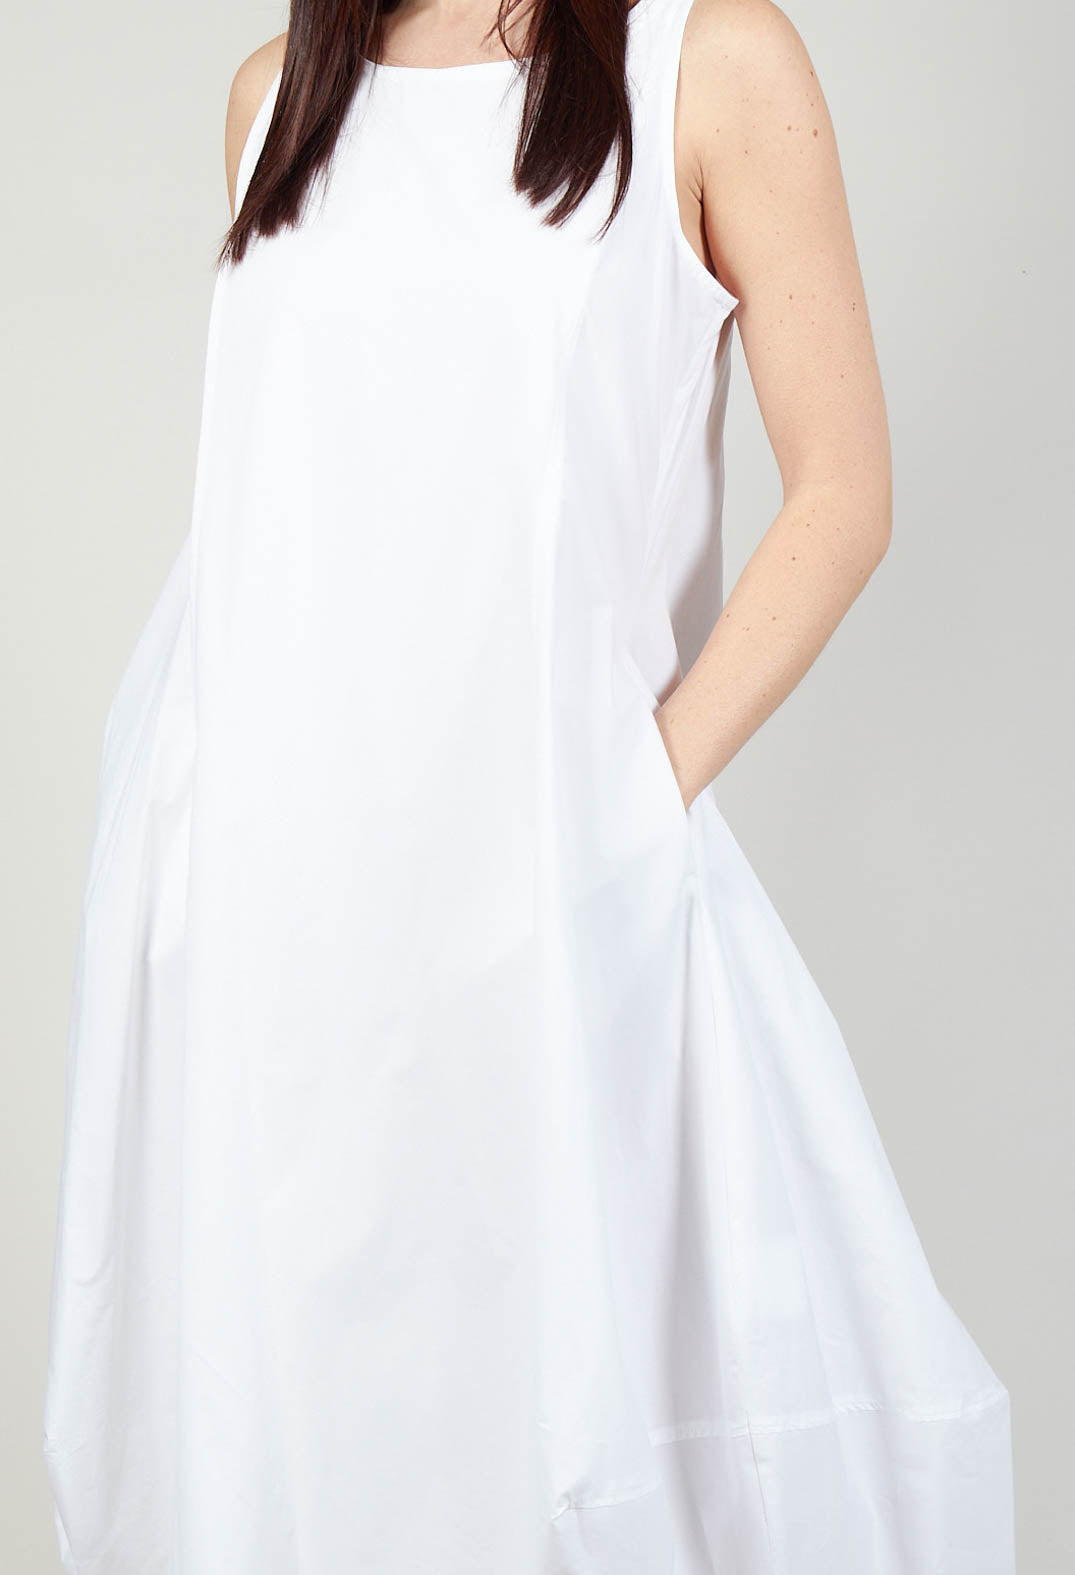 Double Vest Dress in White